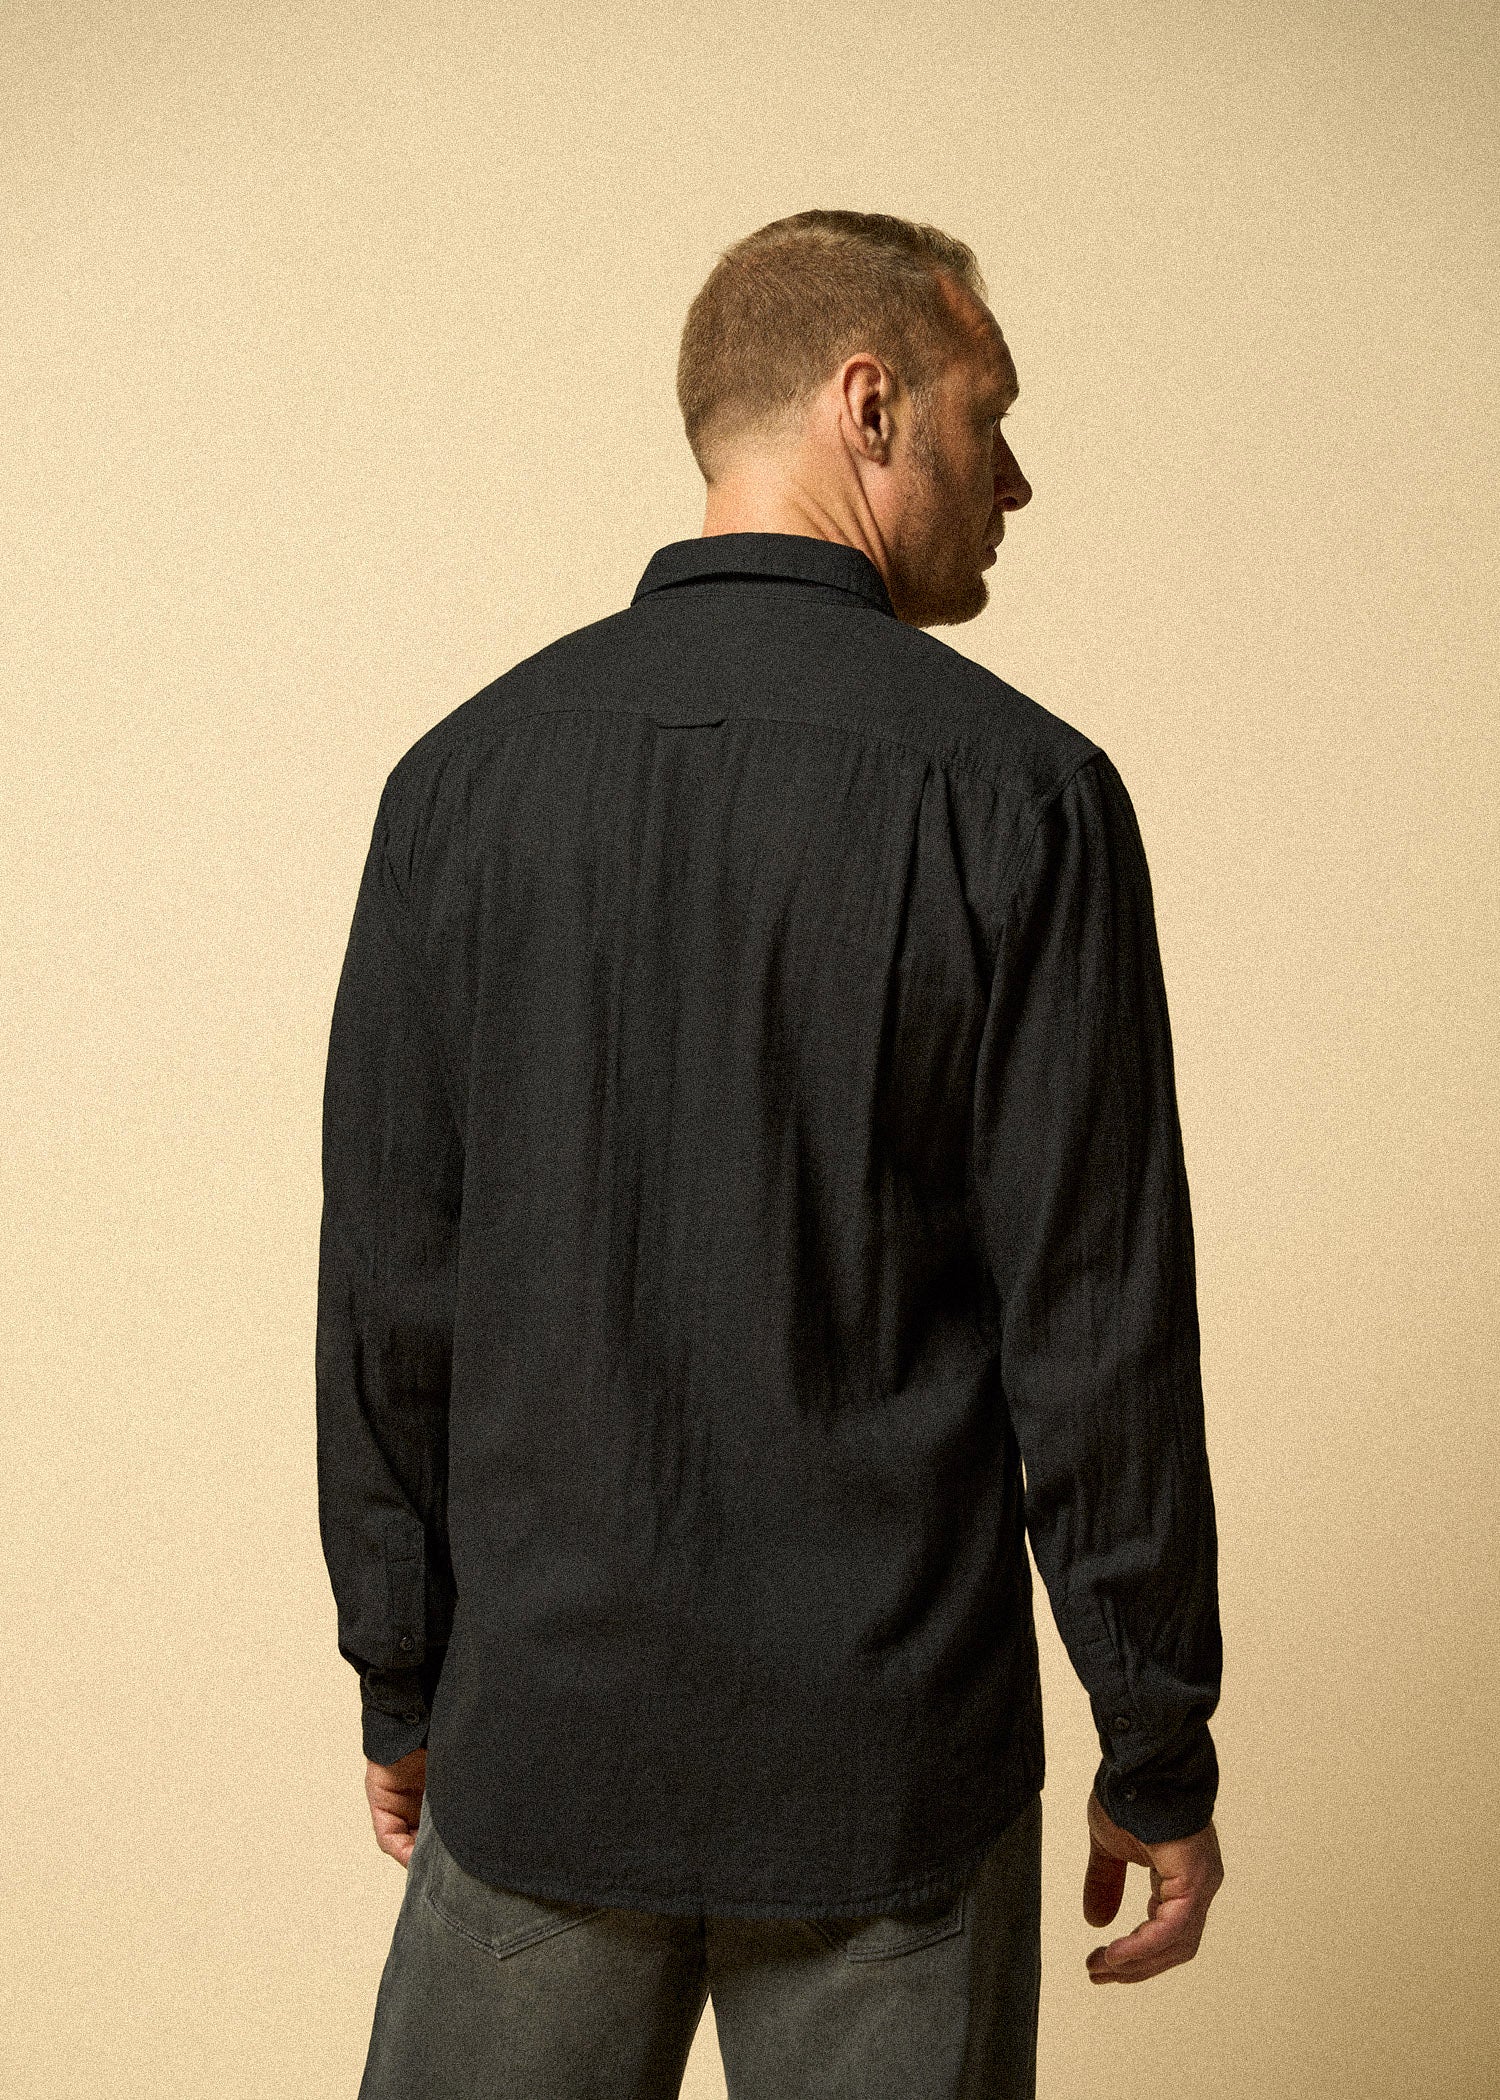    LJ-Men-Double-Weave-Shirt-Vintage-Black-back